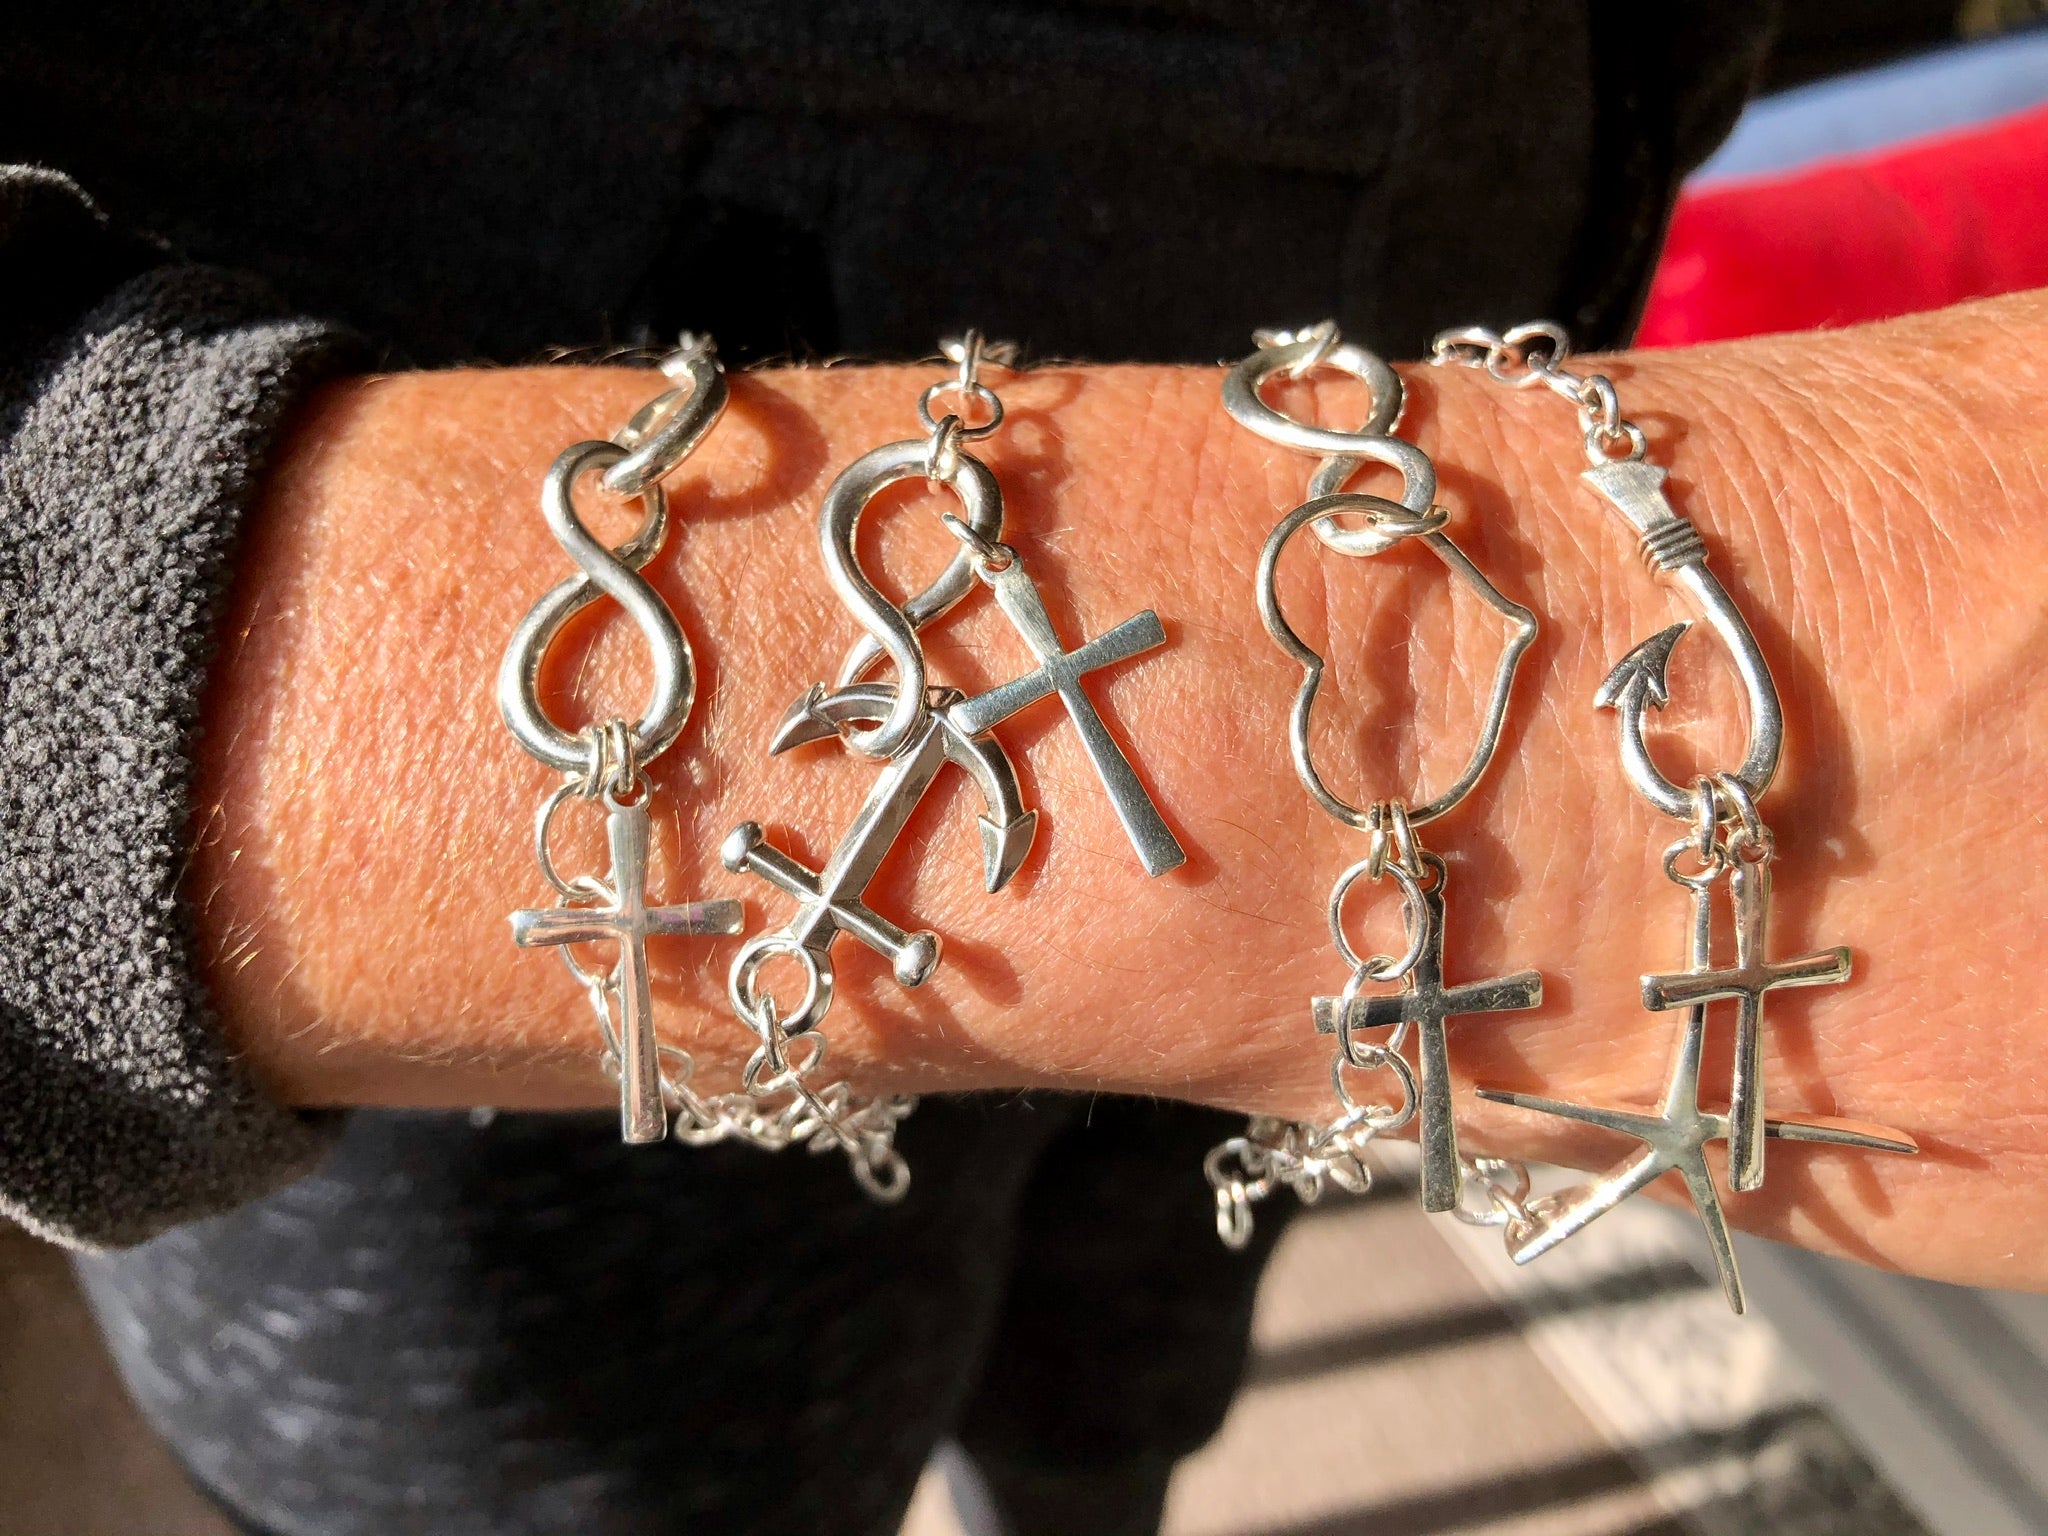 Christ Collection chain link Bracelets